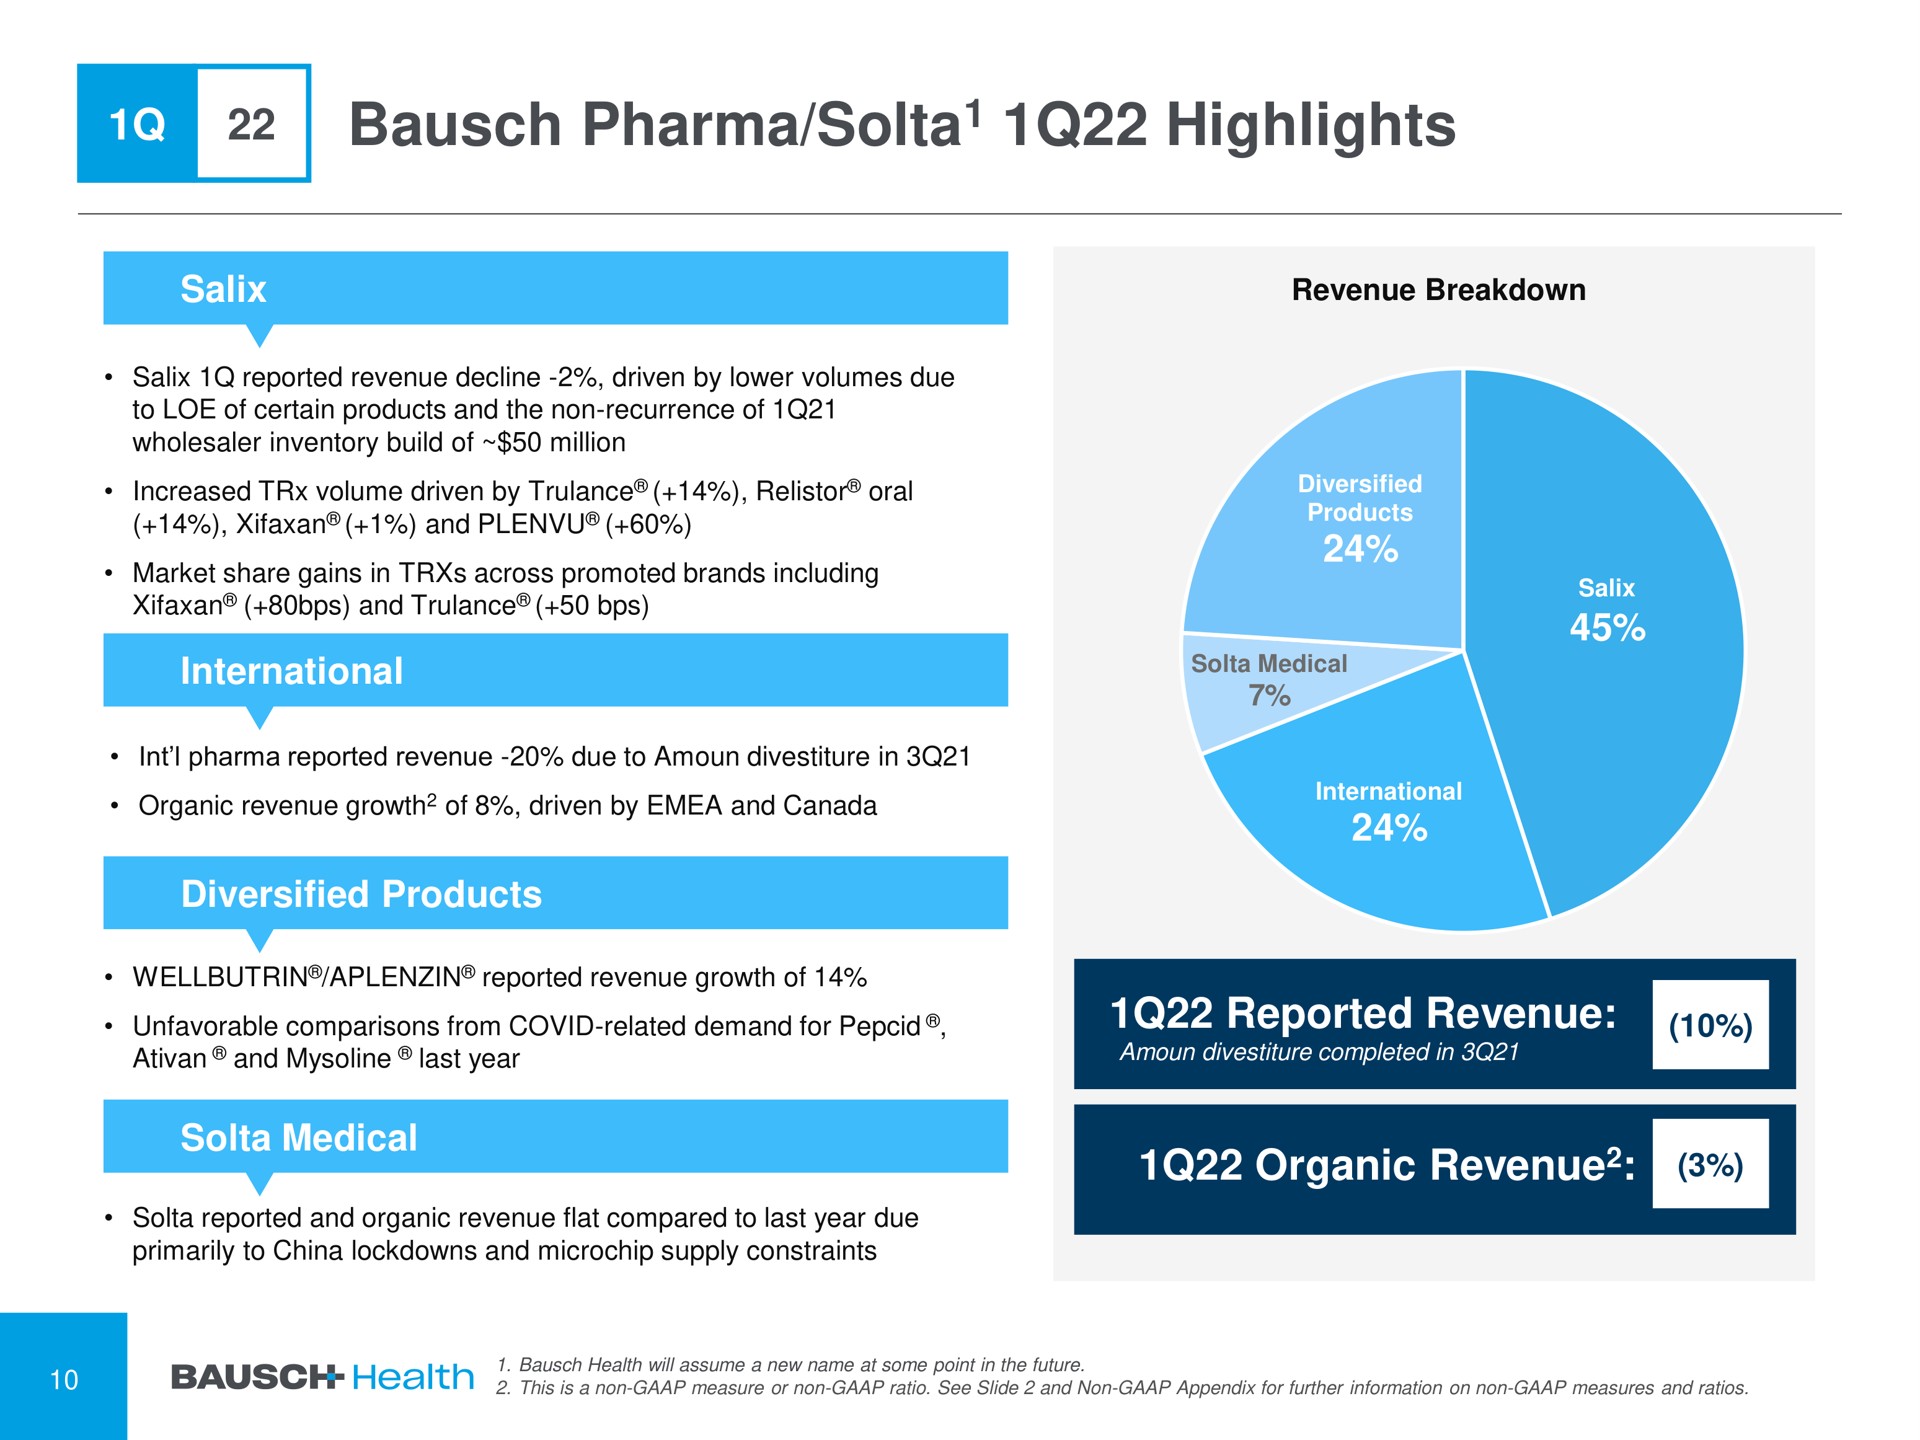 highlights | Bausch Health Companies